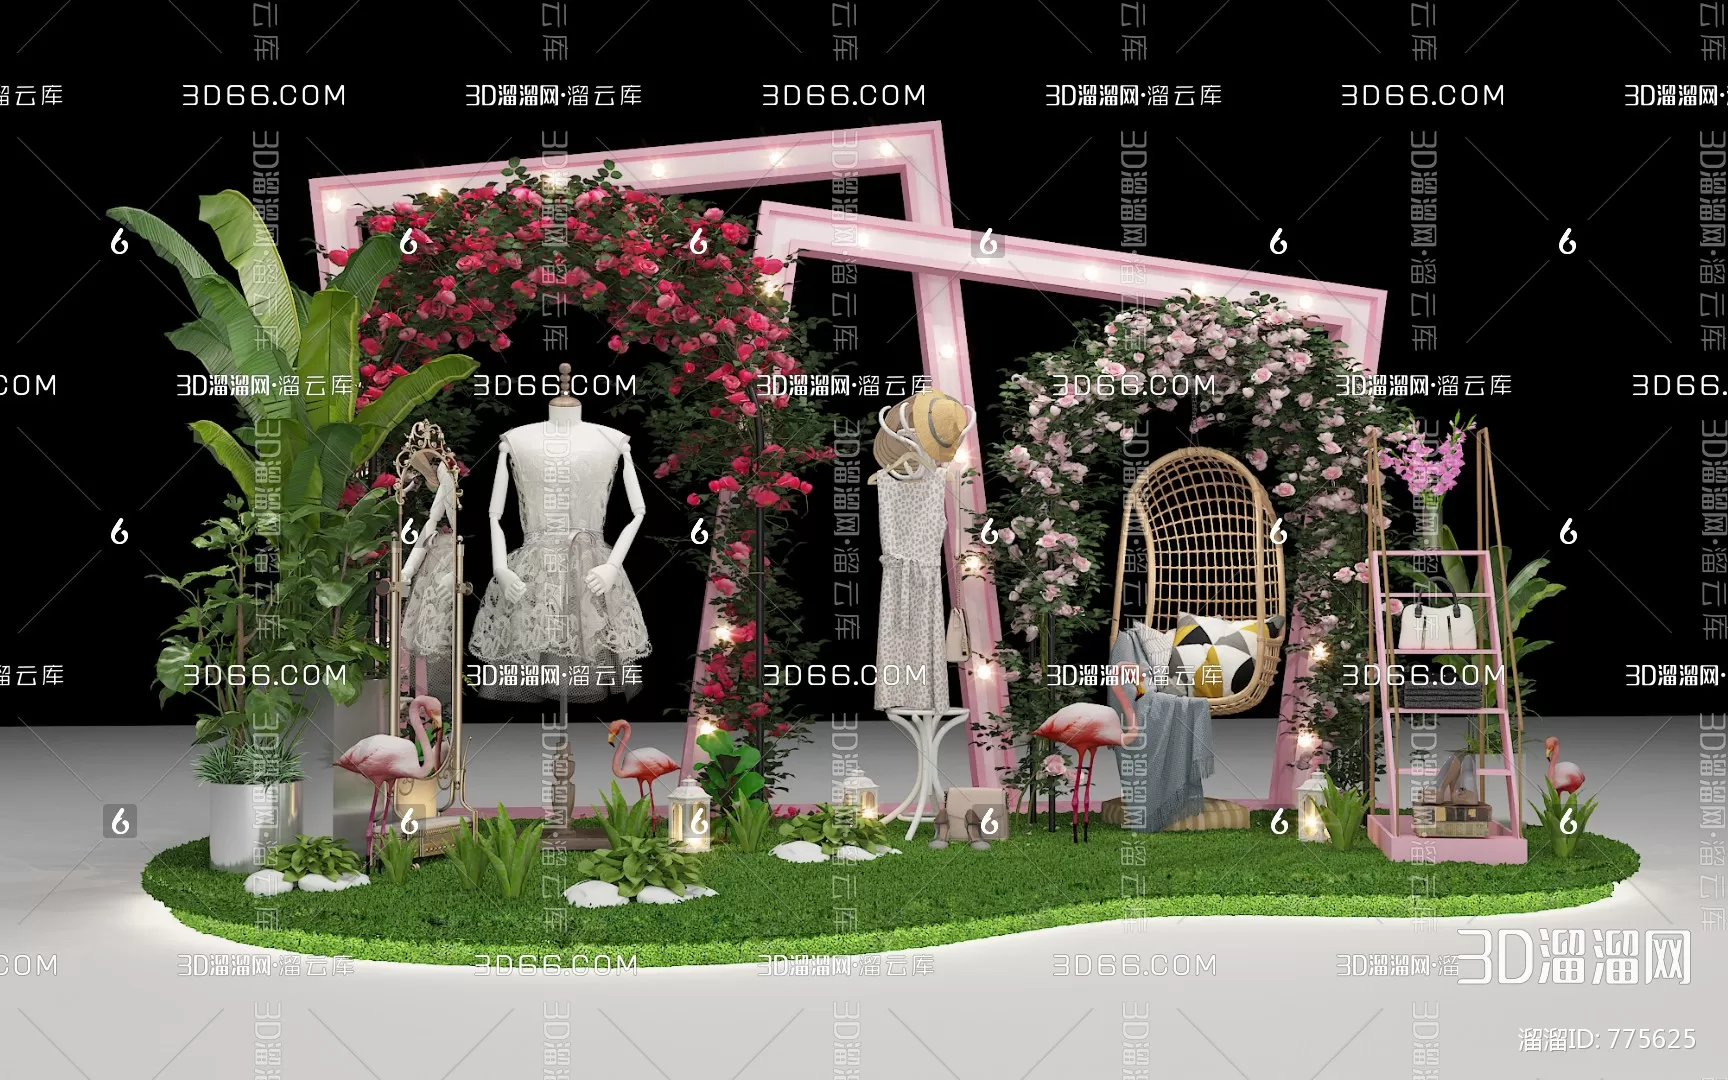 DECORATION – WEDDING 3D MODELS – 033